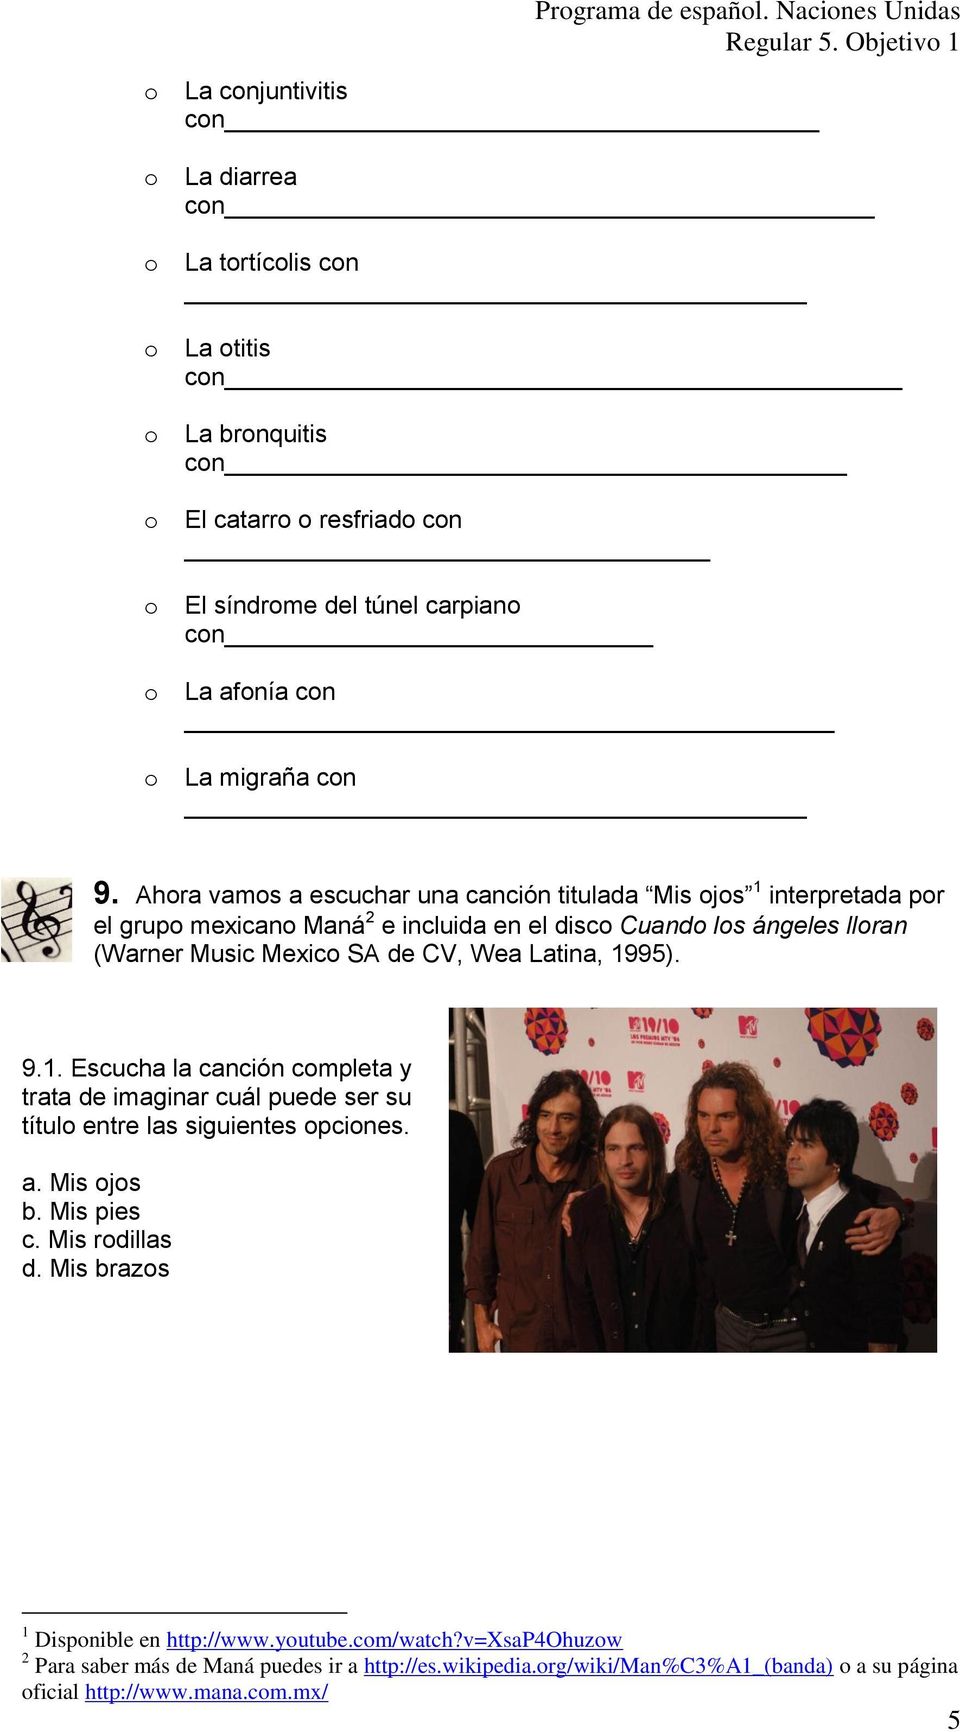 Ahra vams a escuchar una canción titulada Mis js 1 interpretada pr el grup mexican Maná 2 e incluida en el disc Cuand ls ángeles llran (Warner Music Mexic SA de CV, Wea Latina, 1995).